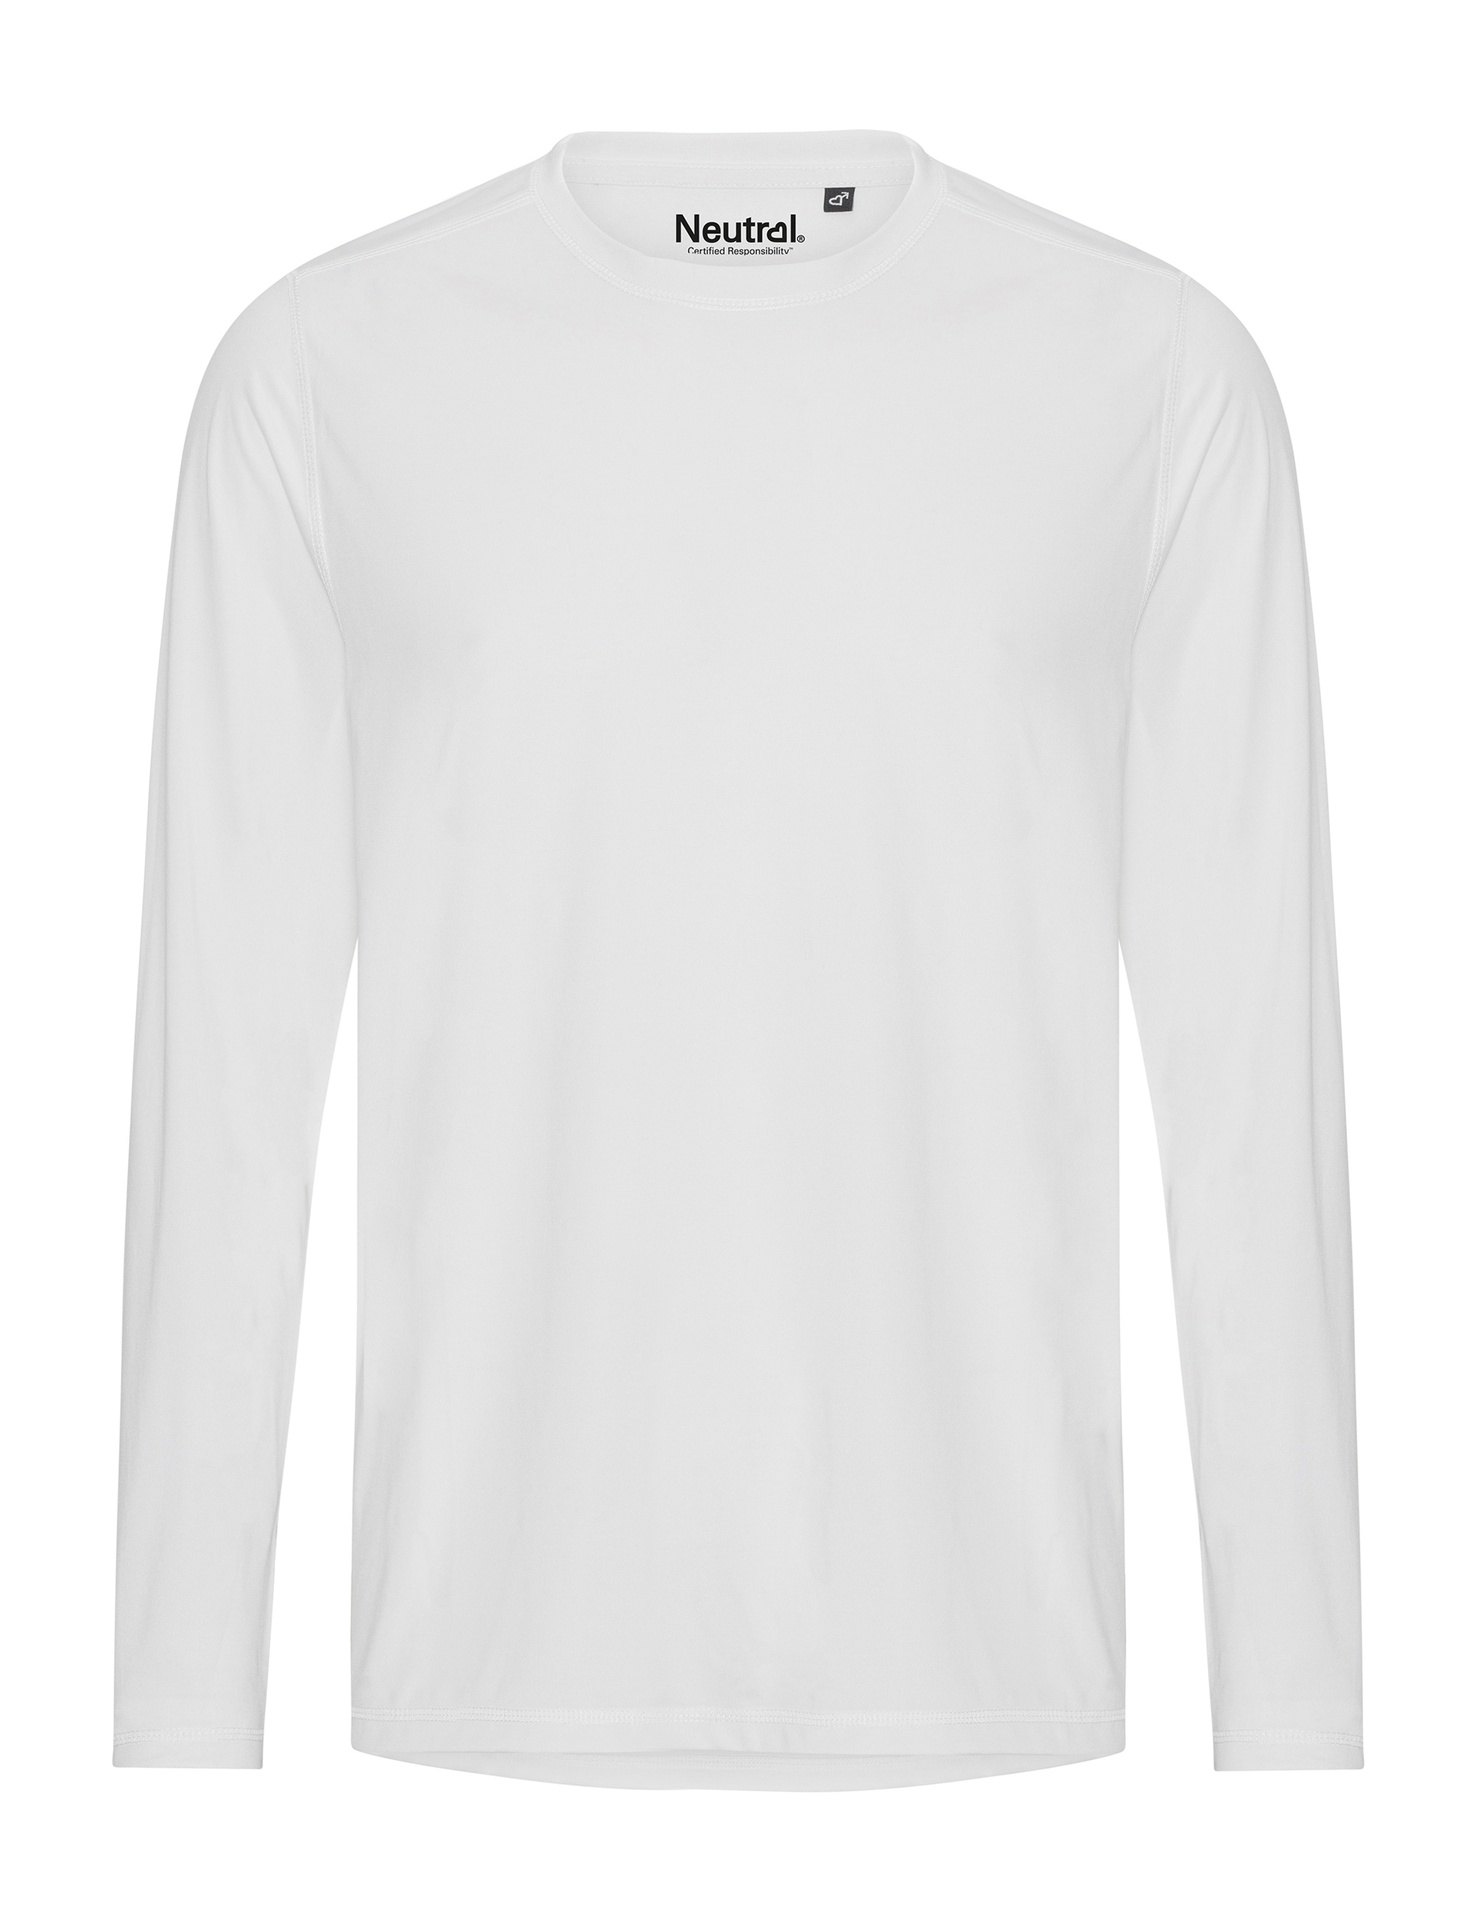 [PR/03822] Recycled Performance LS T-Shirt (White 01, L)